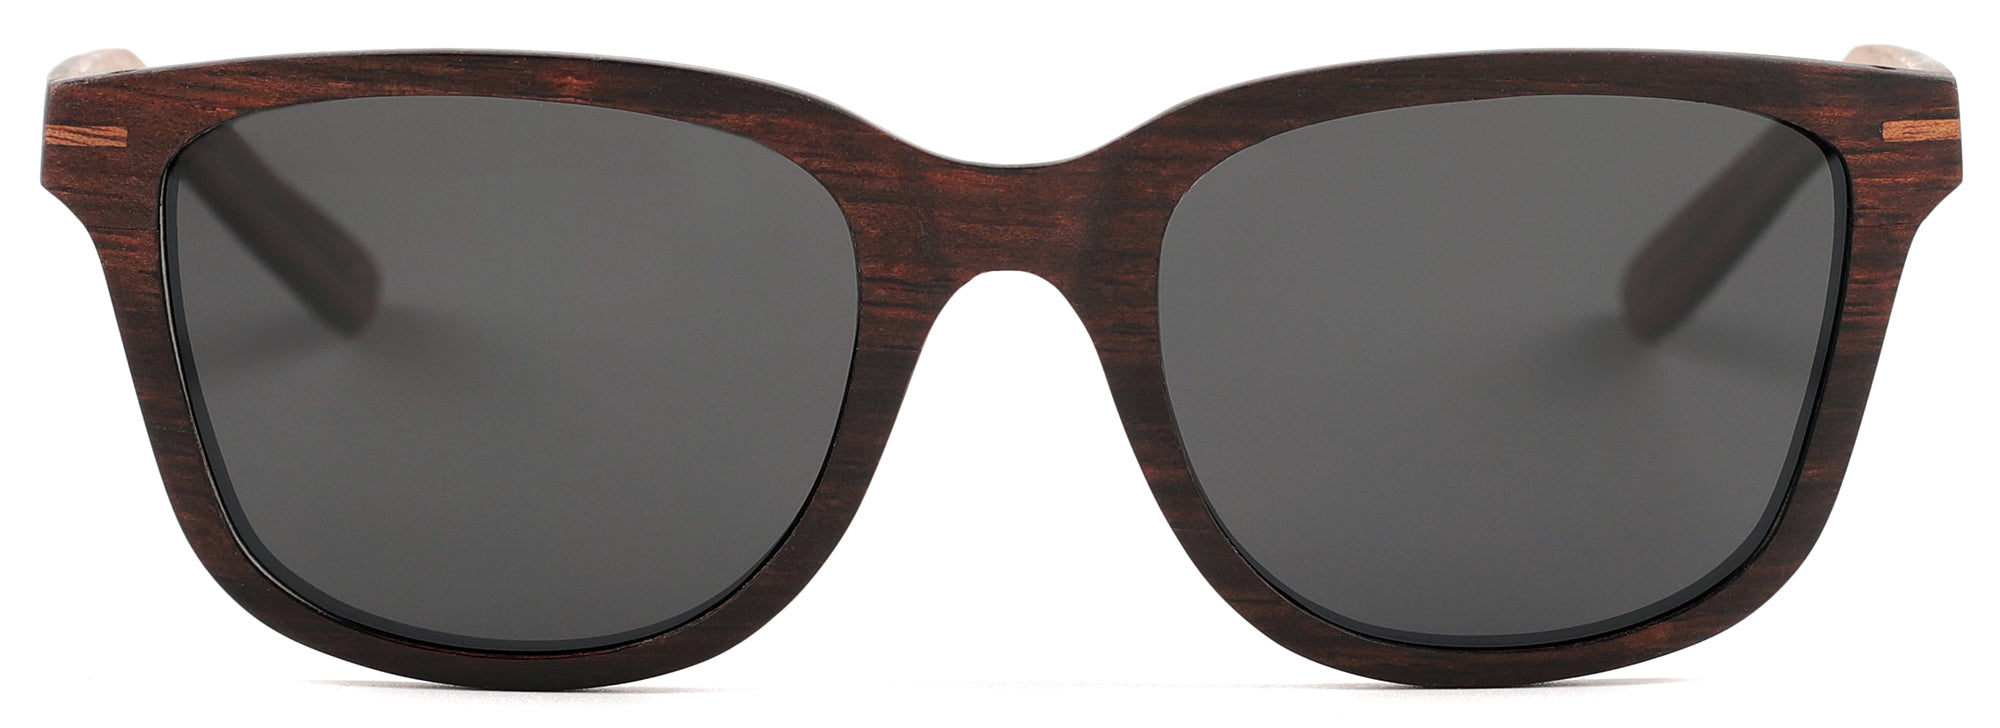 Asher Sunglasses (RX Compatible)